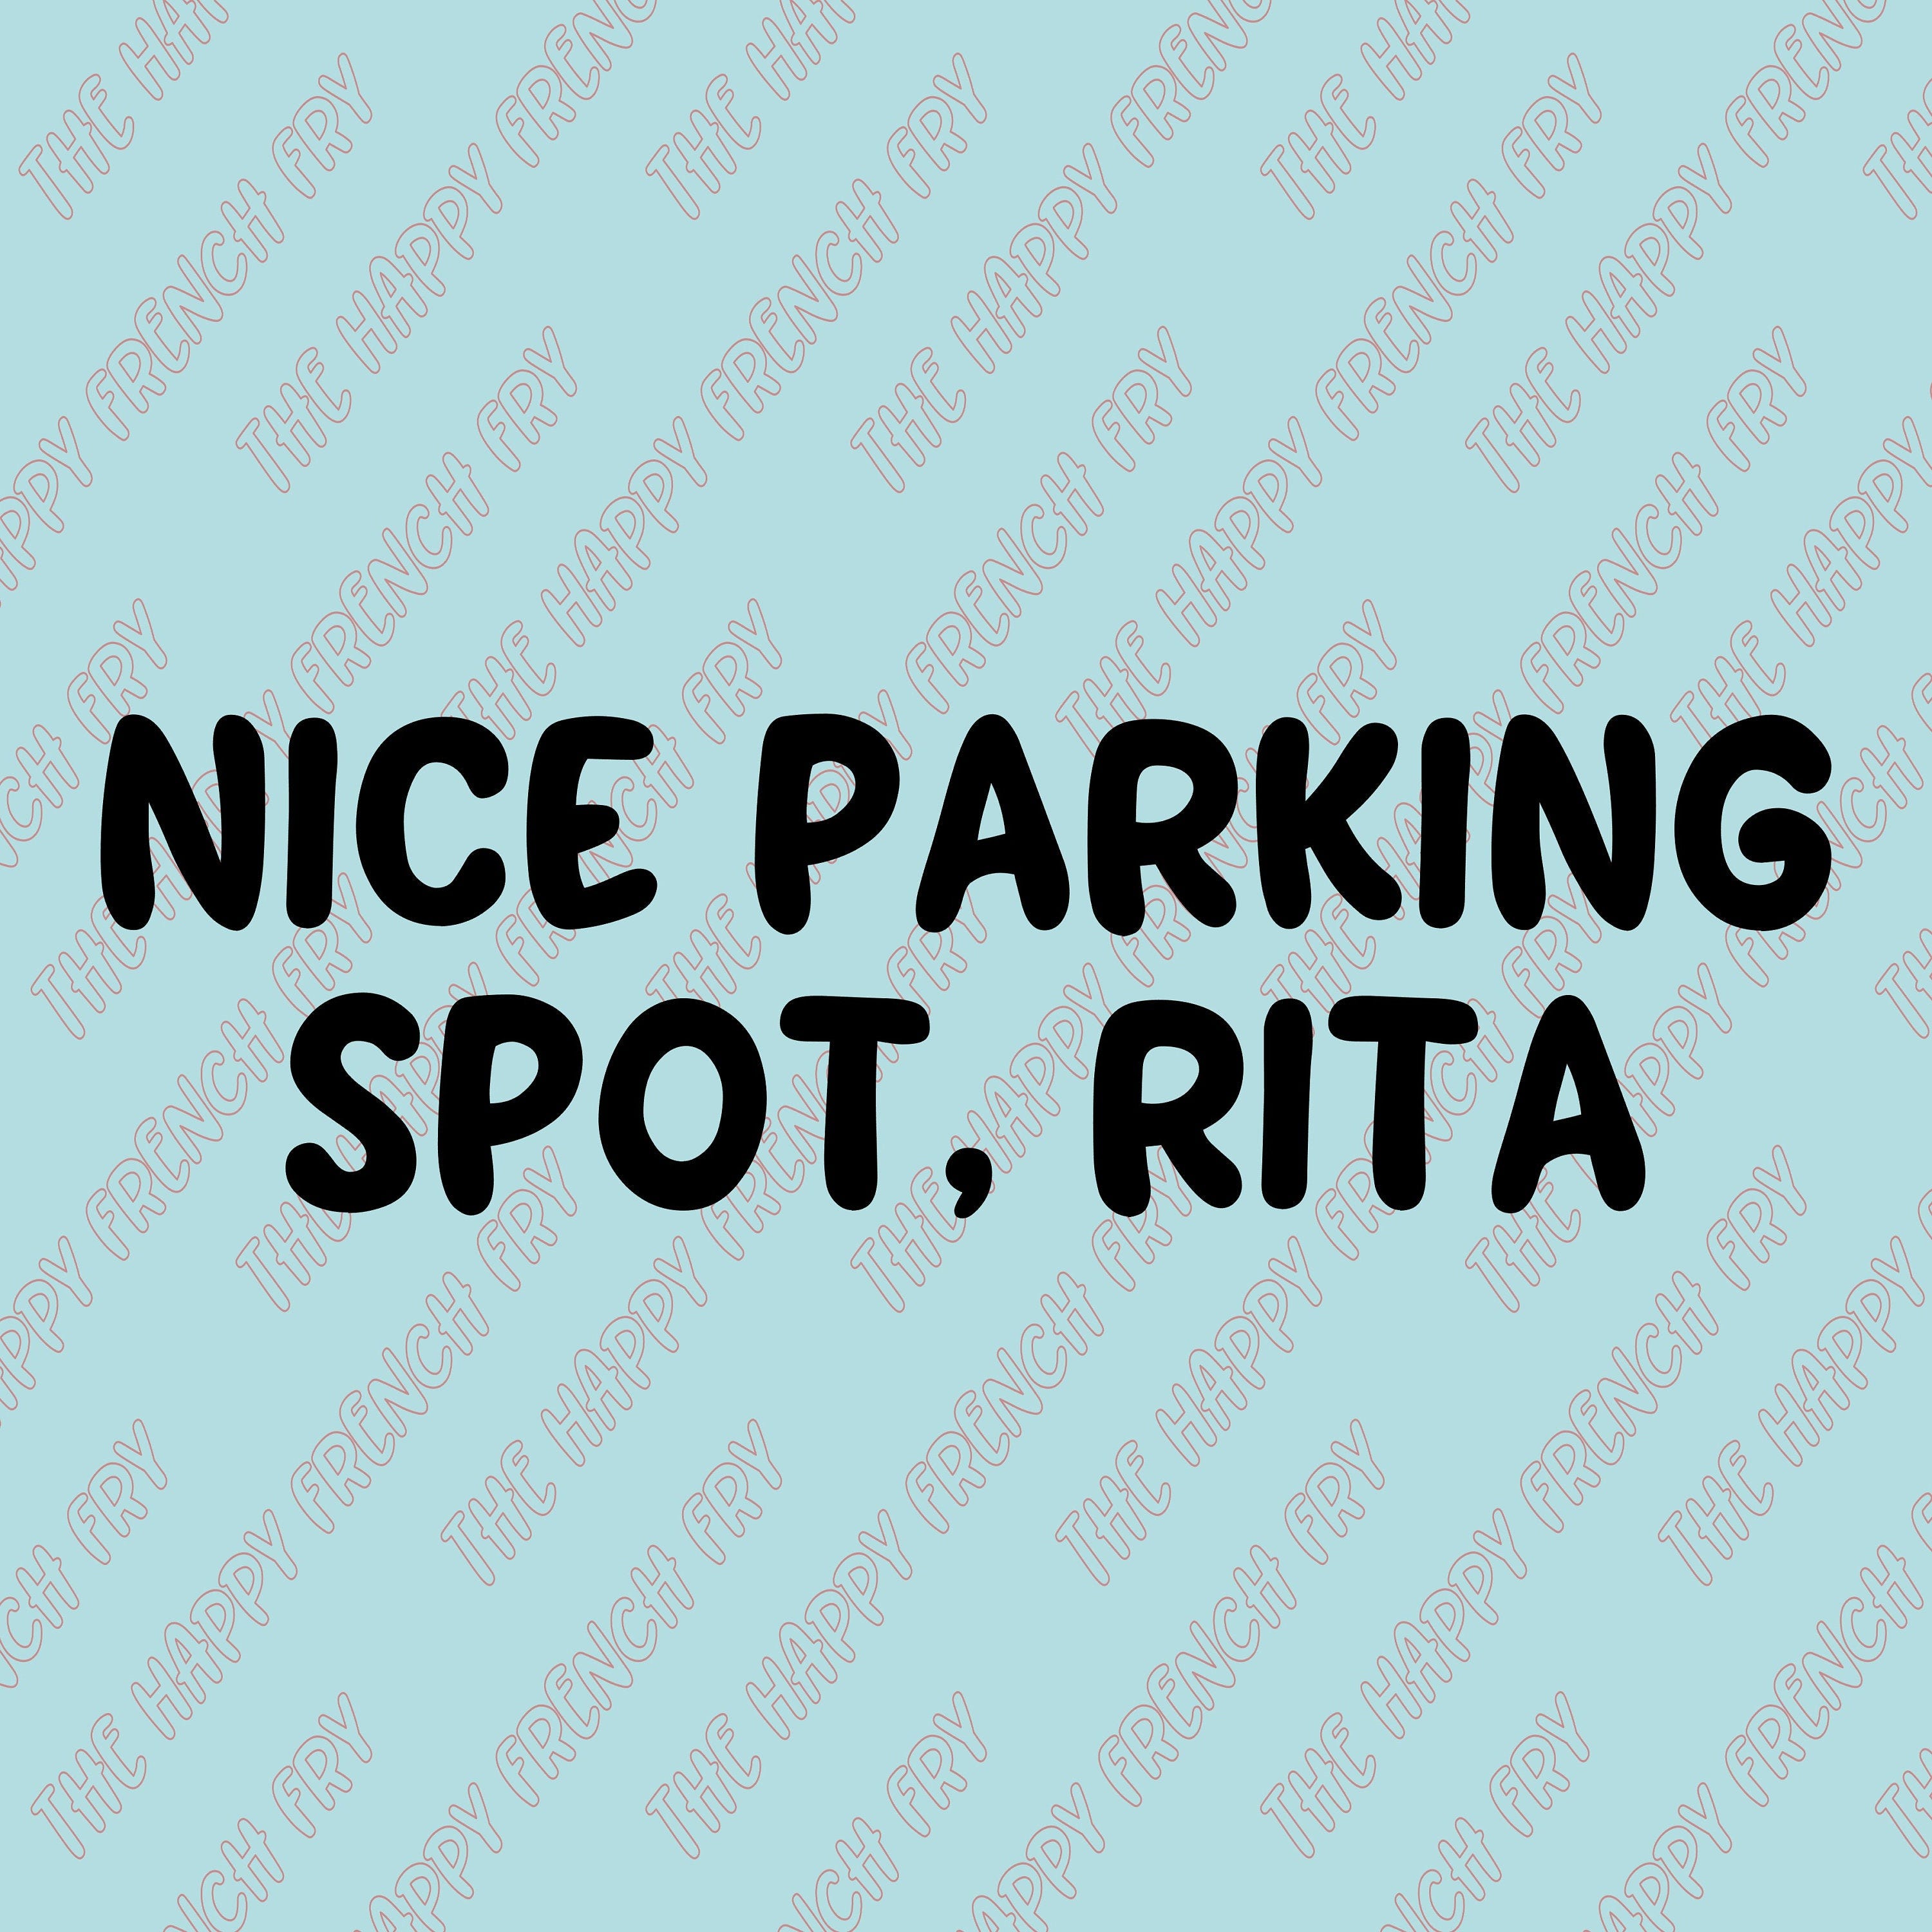 Nice Parking Spot Rita, Bluey Grannies, Bingo Bluey Chili Bandit Heeler, Vinyl Decal, Window Sticker, Bumper Sticker, Car Decal